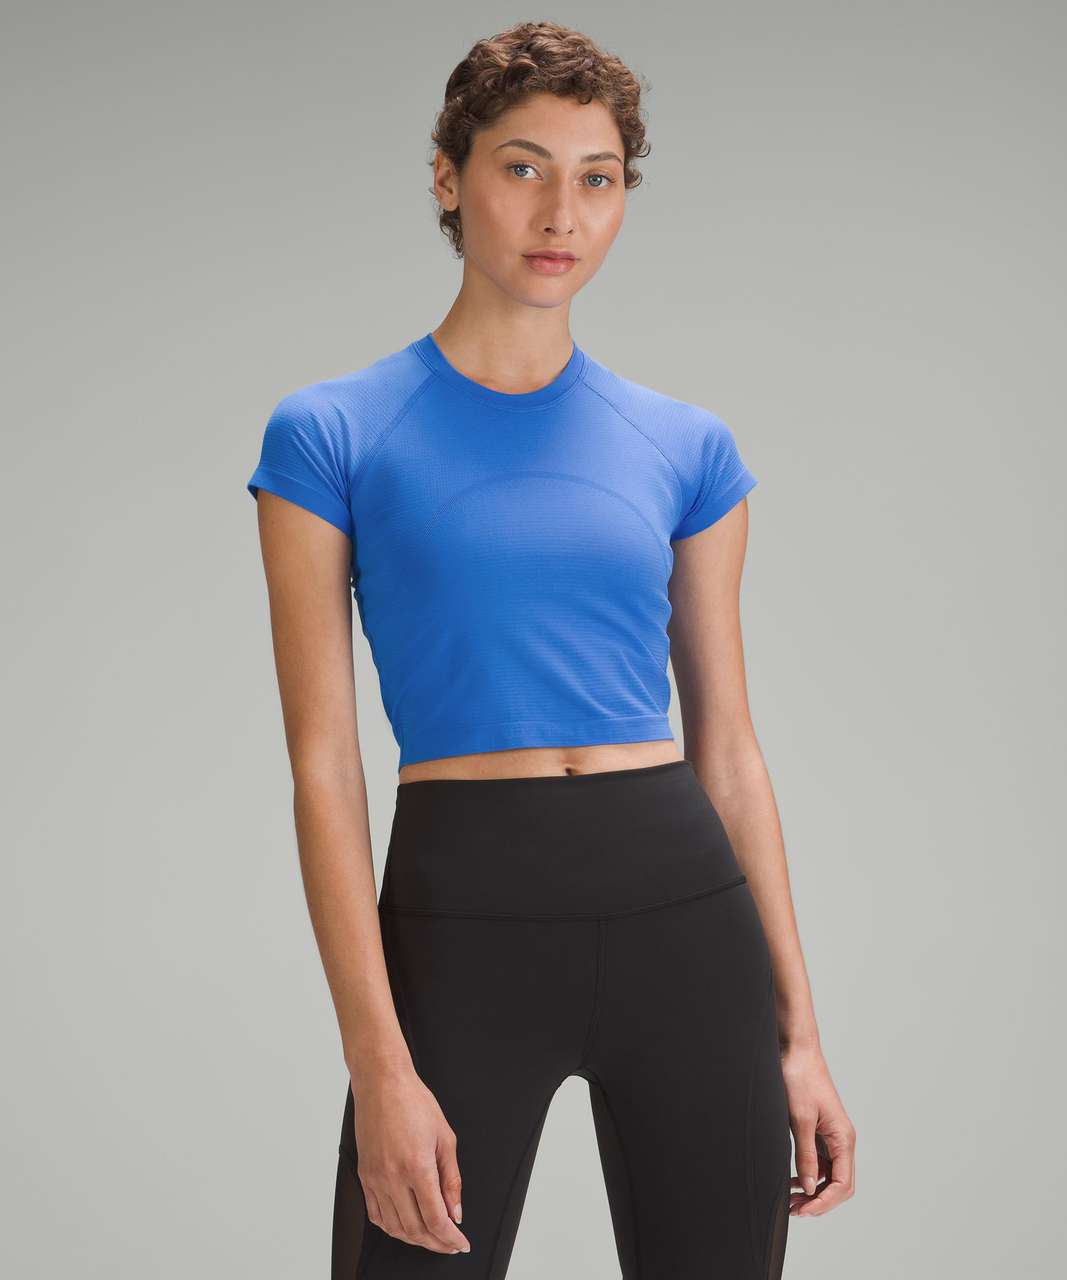 Lululemon Swiftly Tech Cropped Short-Sleeve Shirt 2.0 - Pipe Dream Blue / Pipe Dream Blue